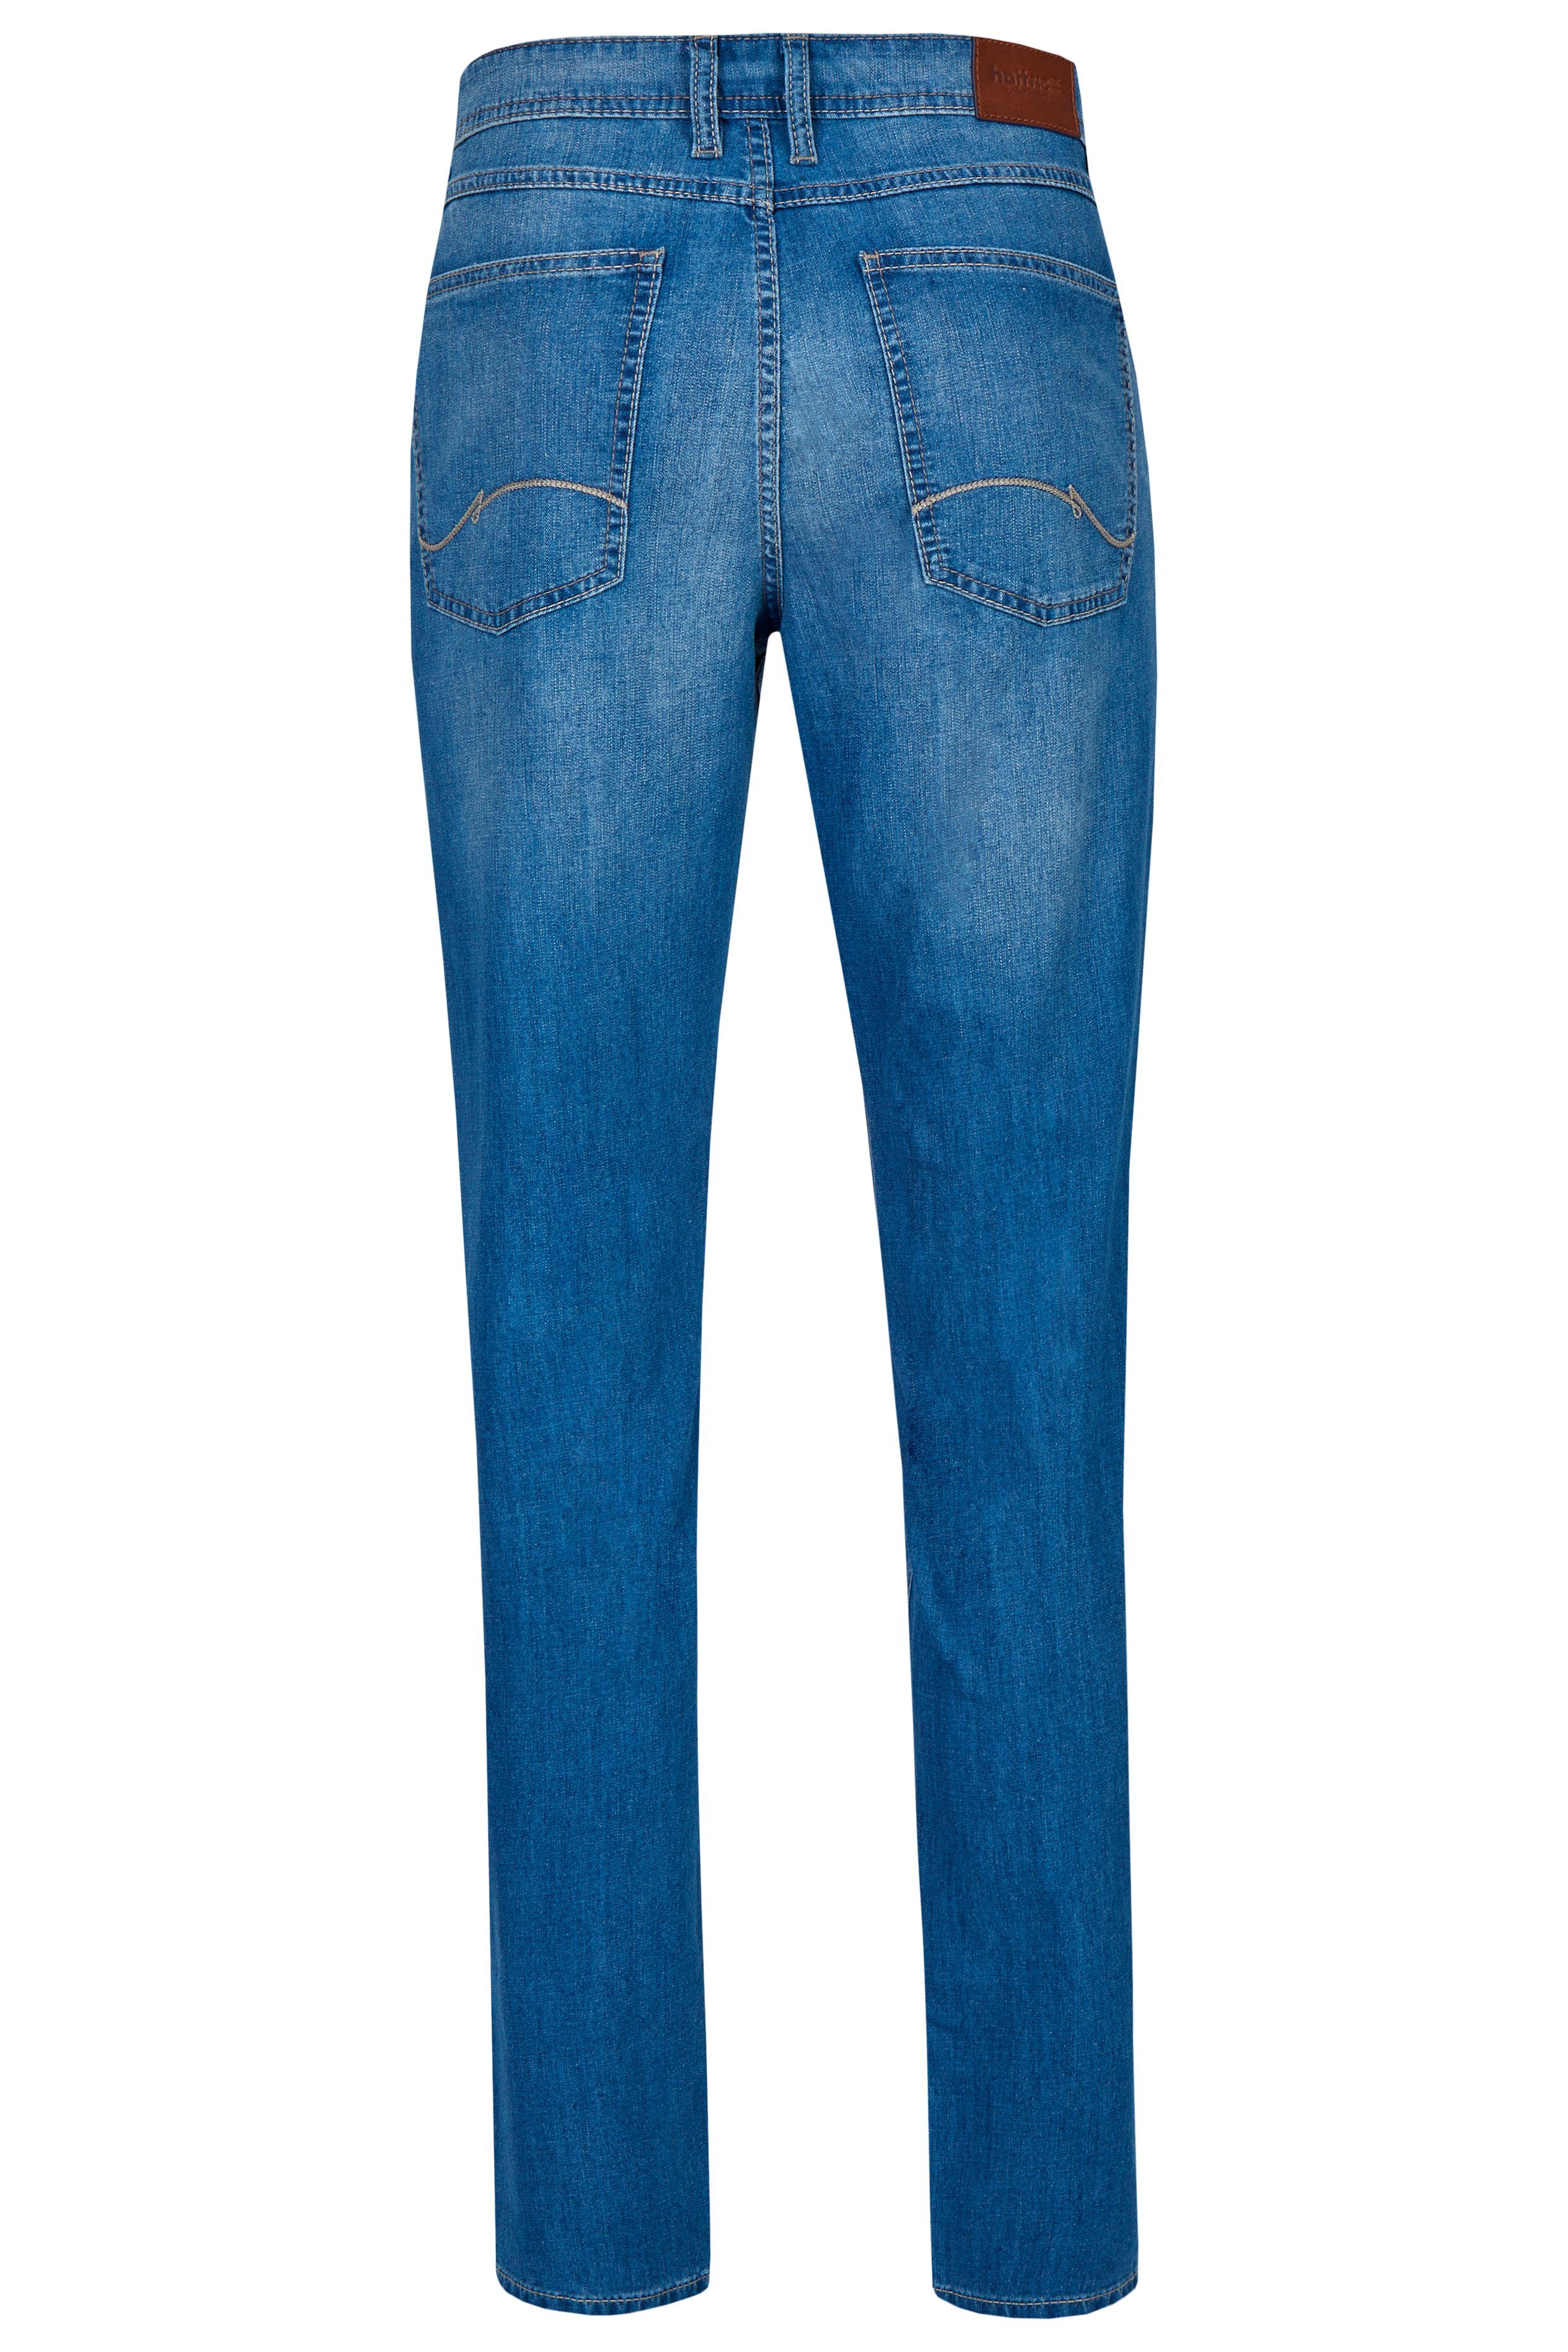 Herren Jeans Hattric 5-Pocket-Jeans HATTRIC HUNTER blue bleached 688275 5647.46 -